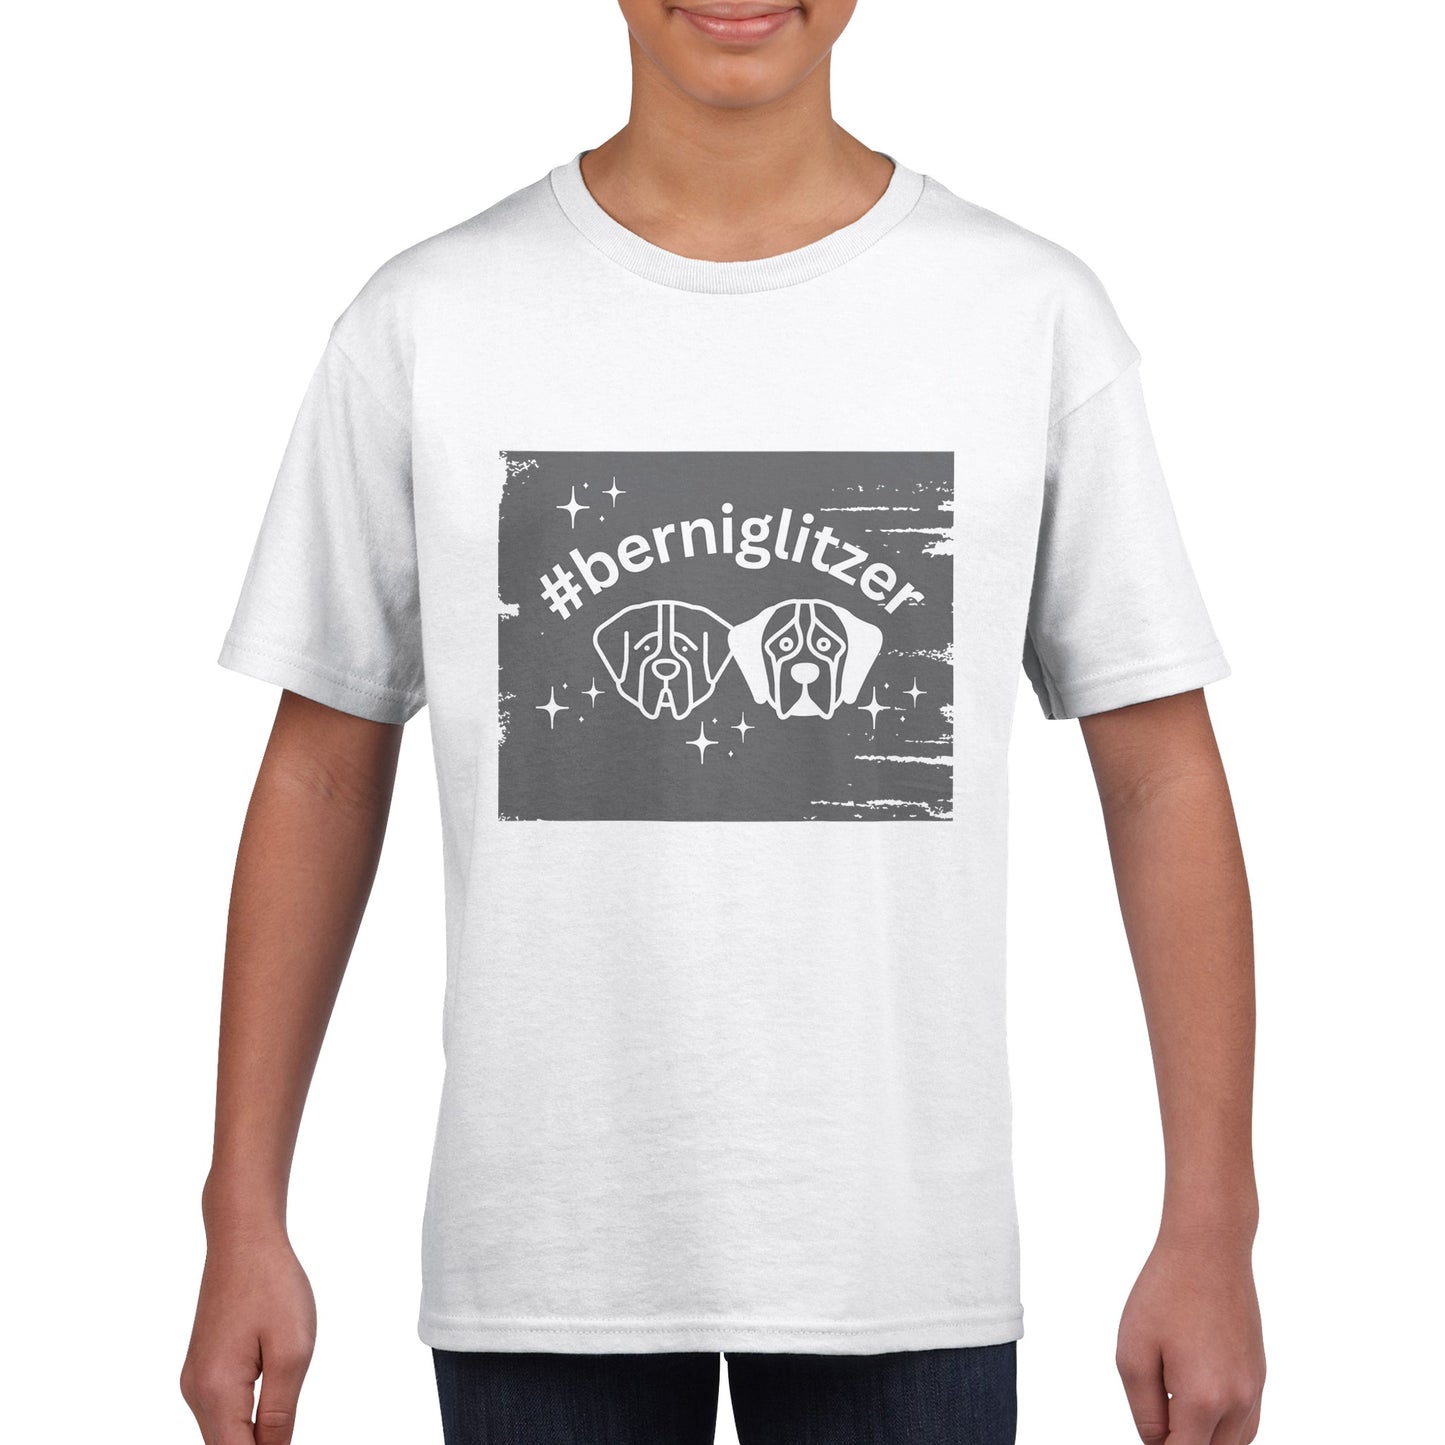 Berniglitzer hanni and isa children's t-shirt